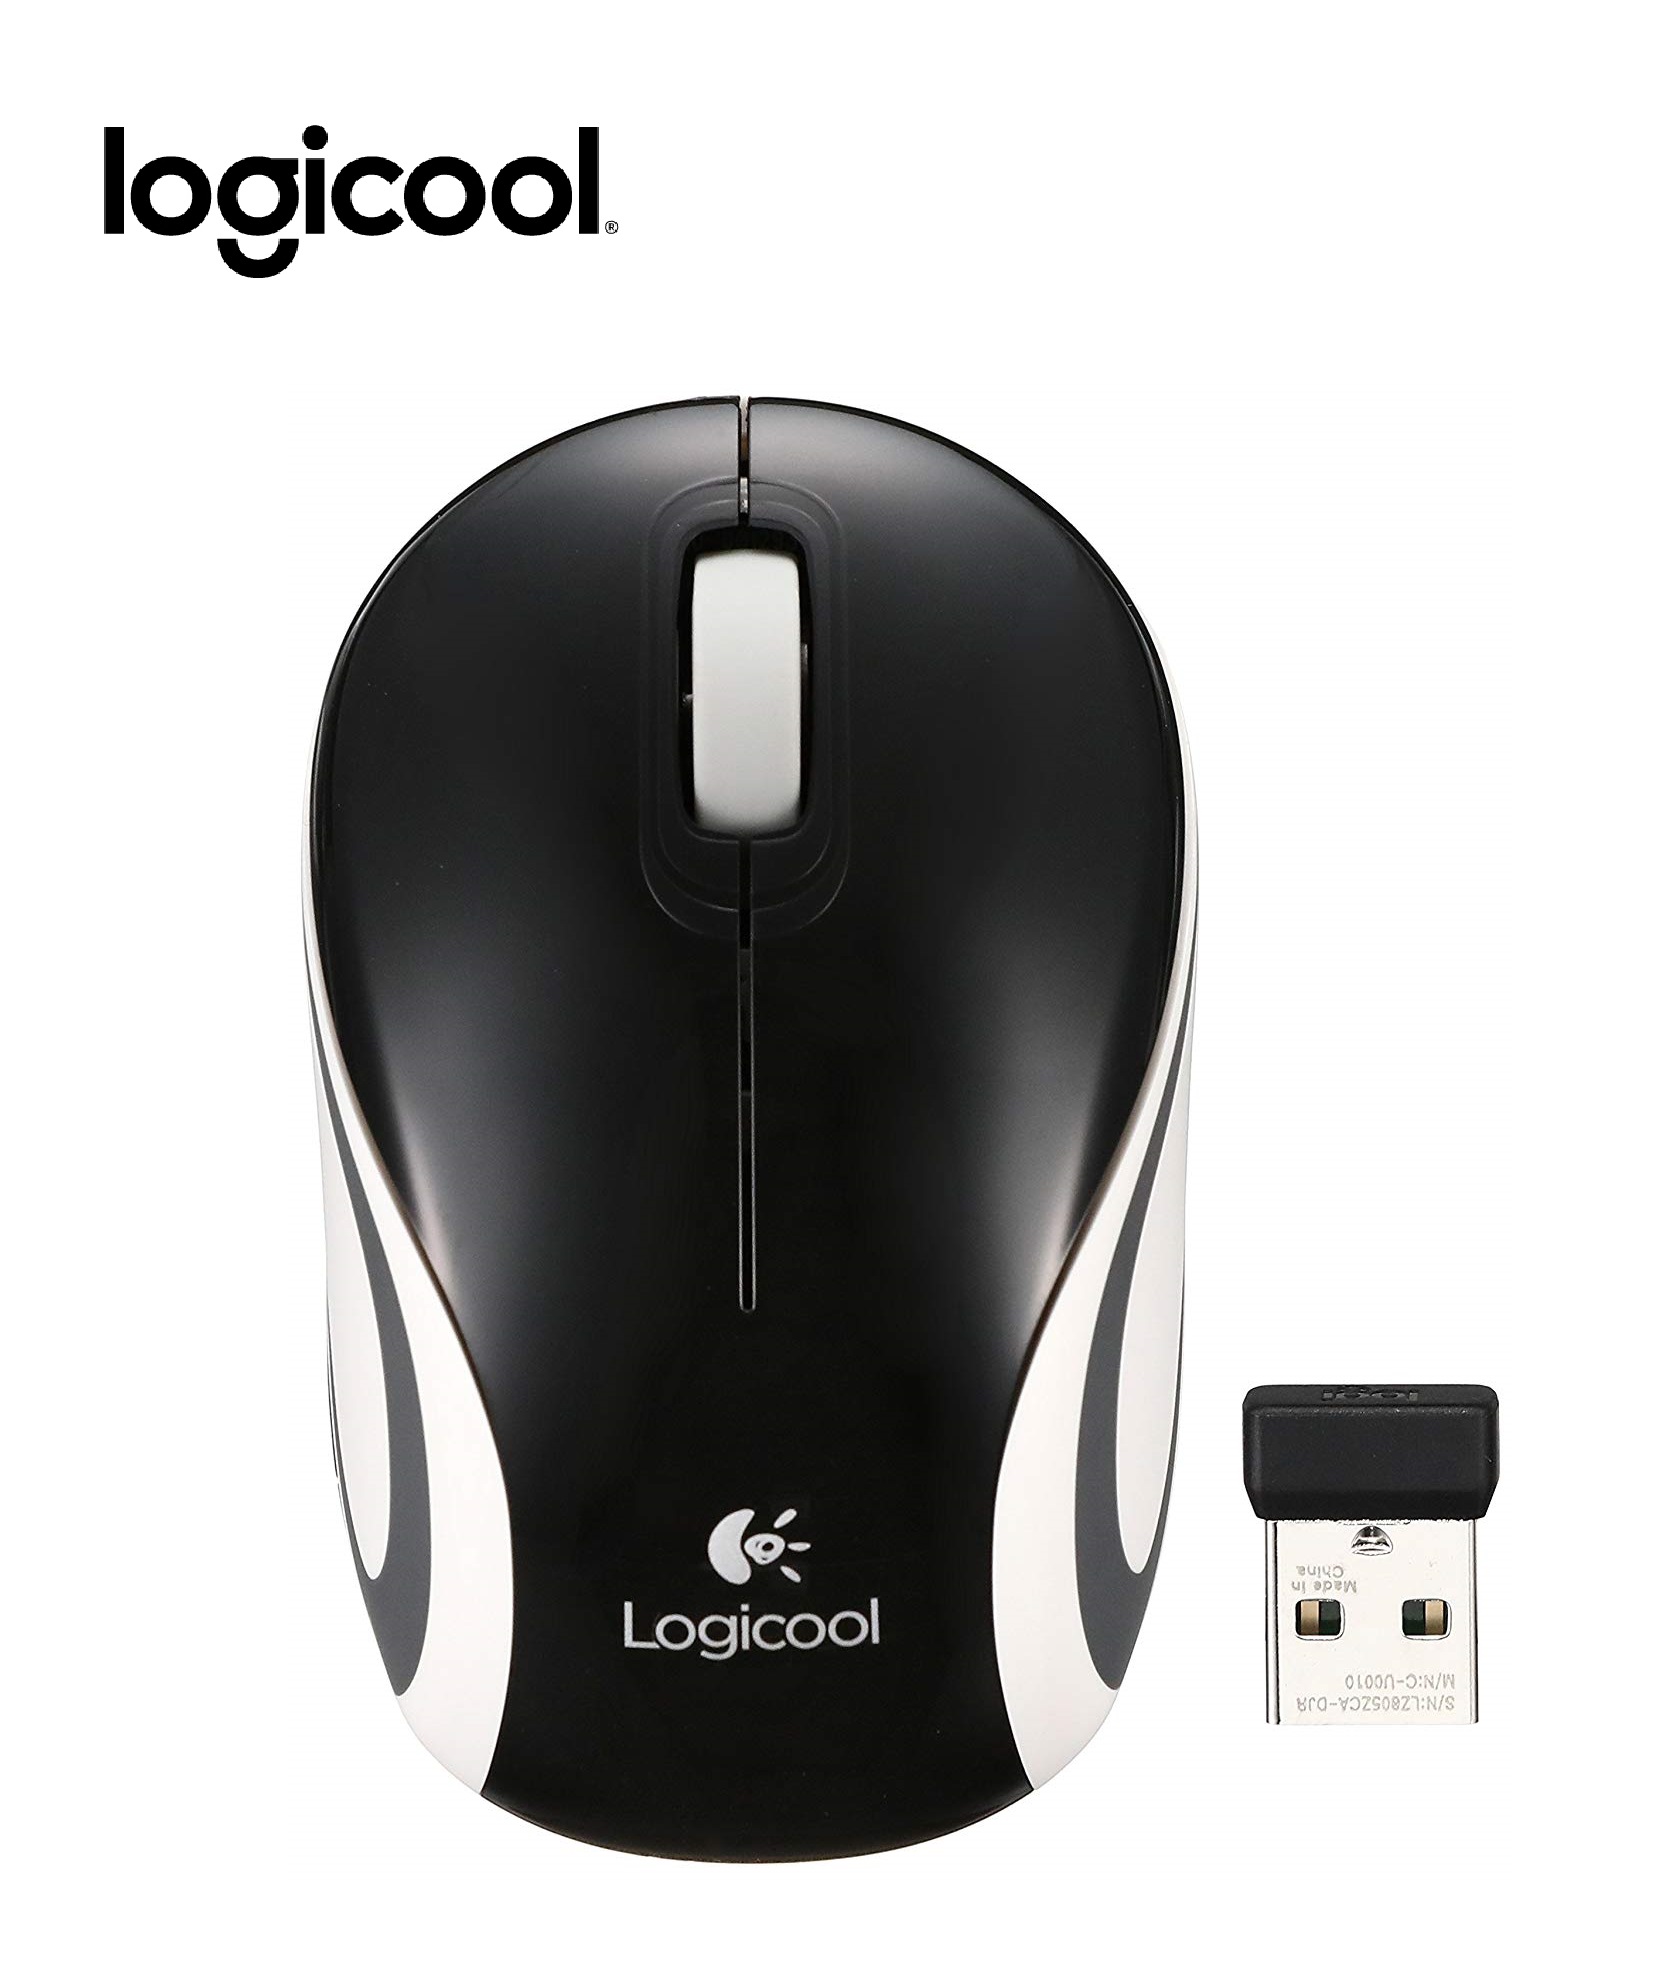 【Logicool】 ロジクール ワイヤレス ミニマウス ブラック 